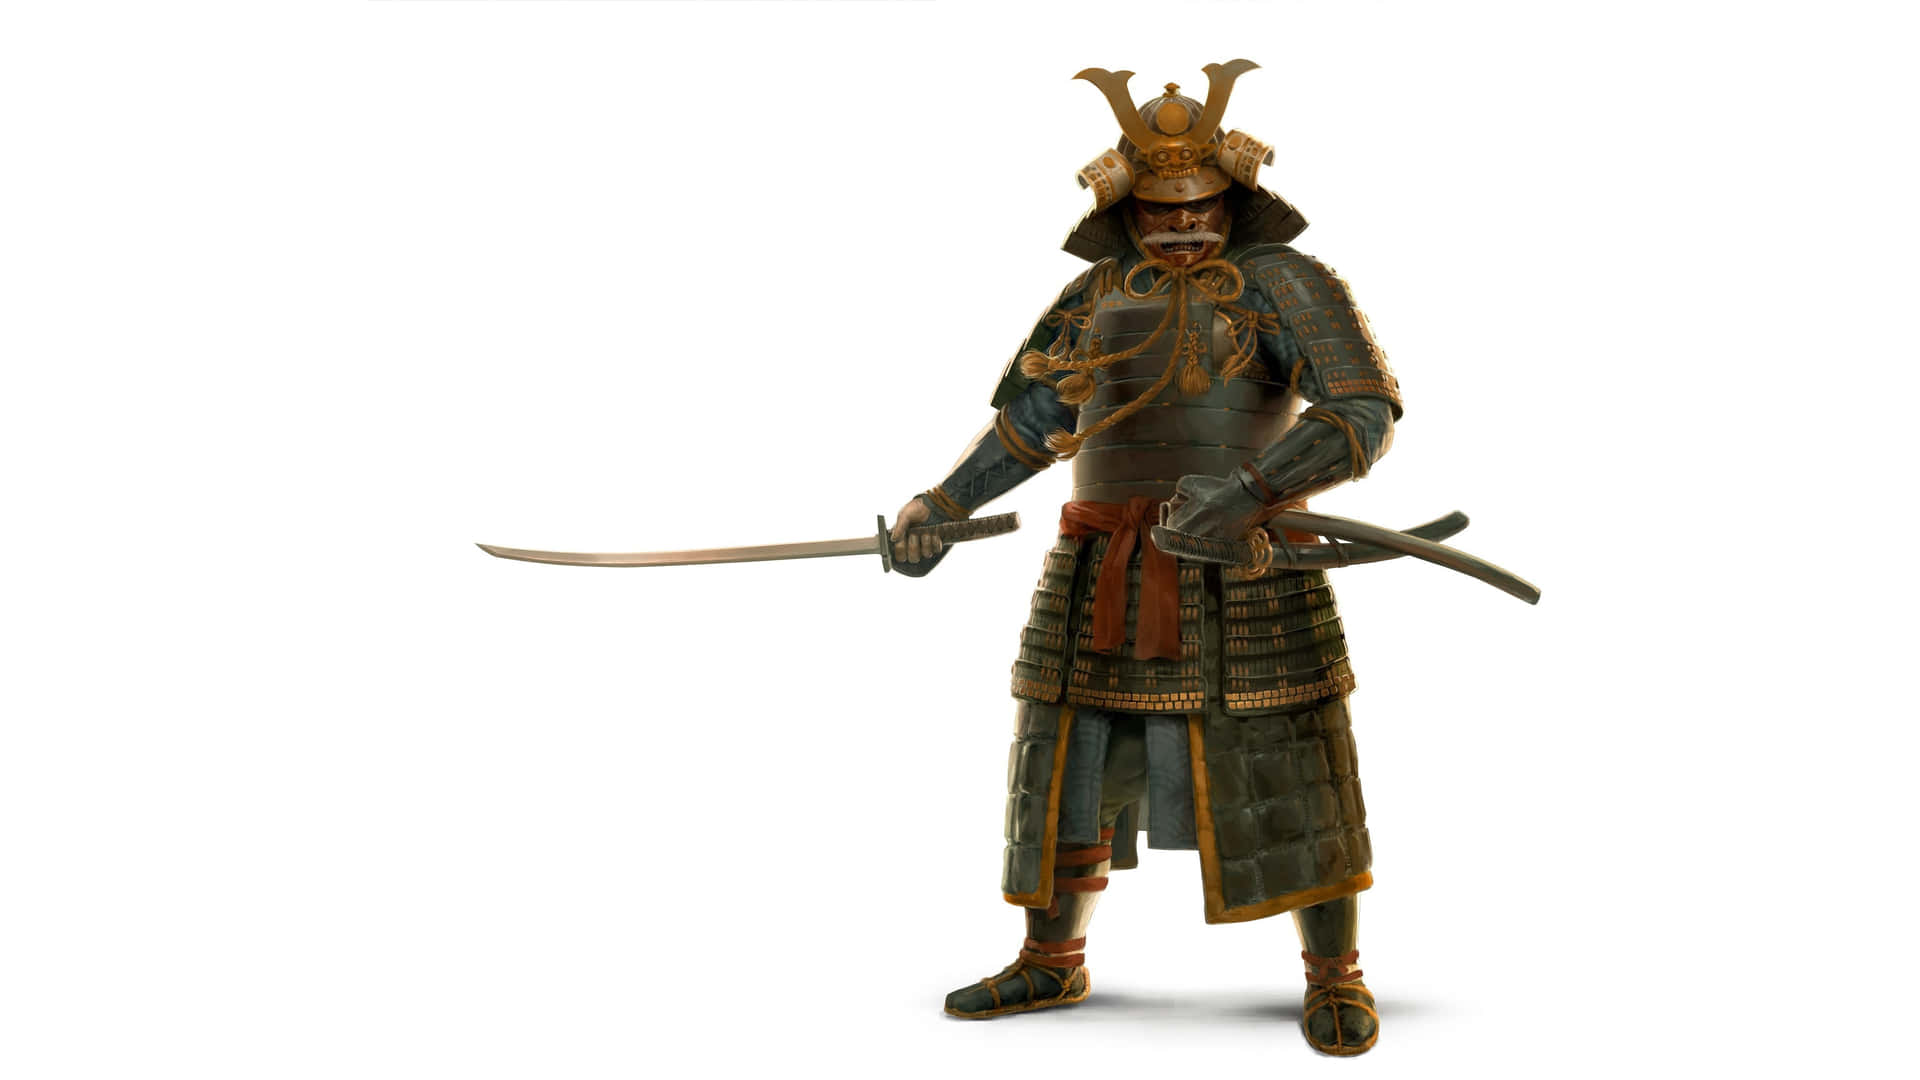 Stunning Samurai Armor on Display Wallpaper